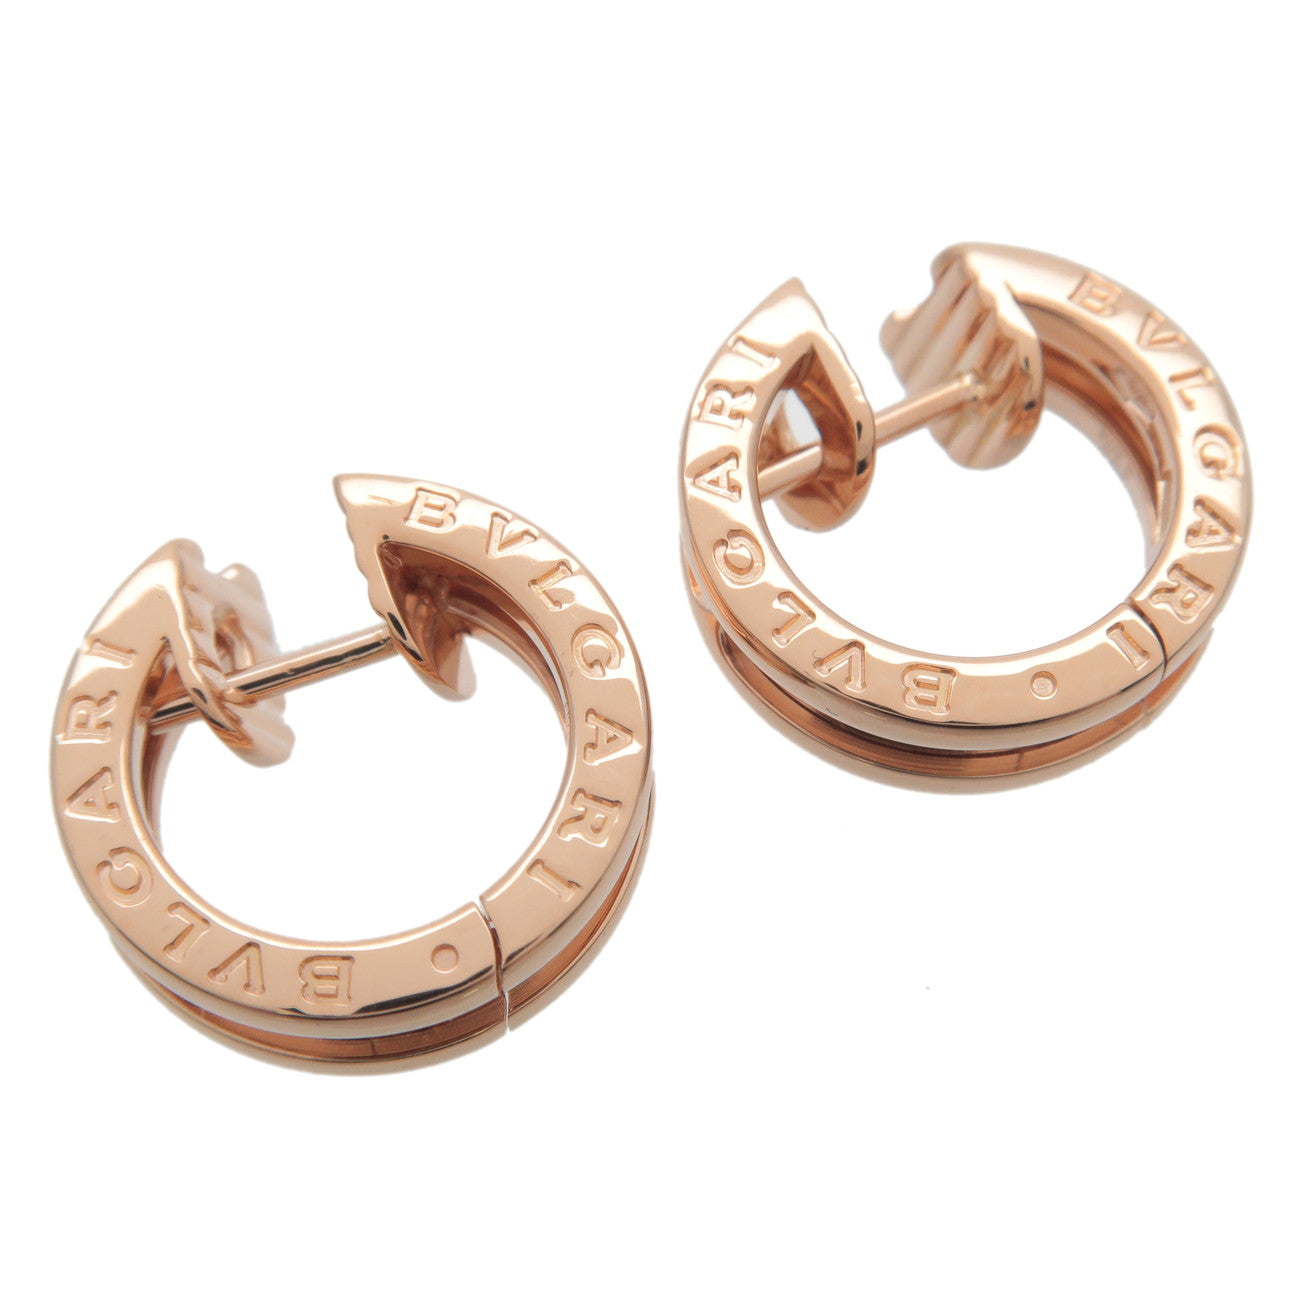 BVLGARI B-zero1 Small Hoop Earrings K18PG 750 Rose Gold